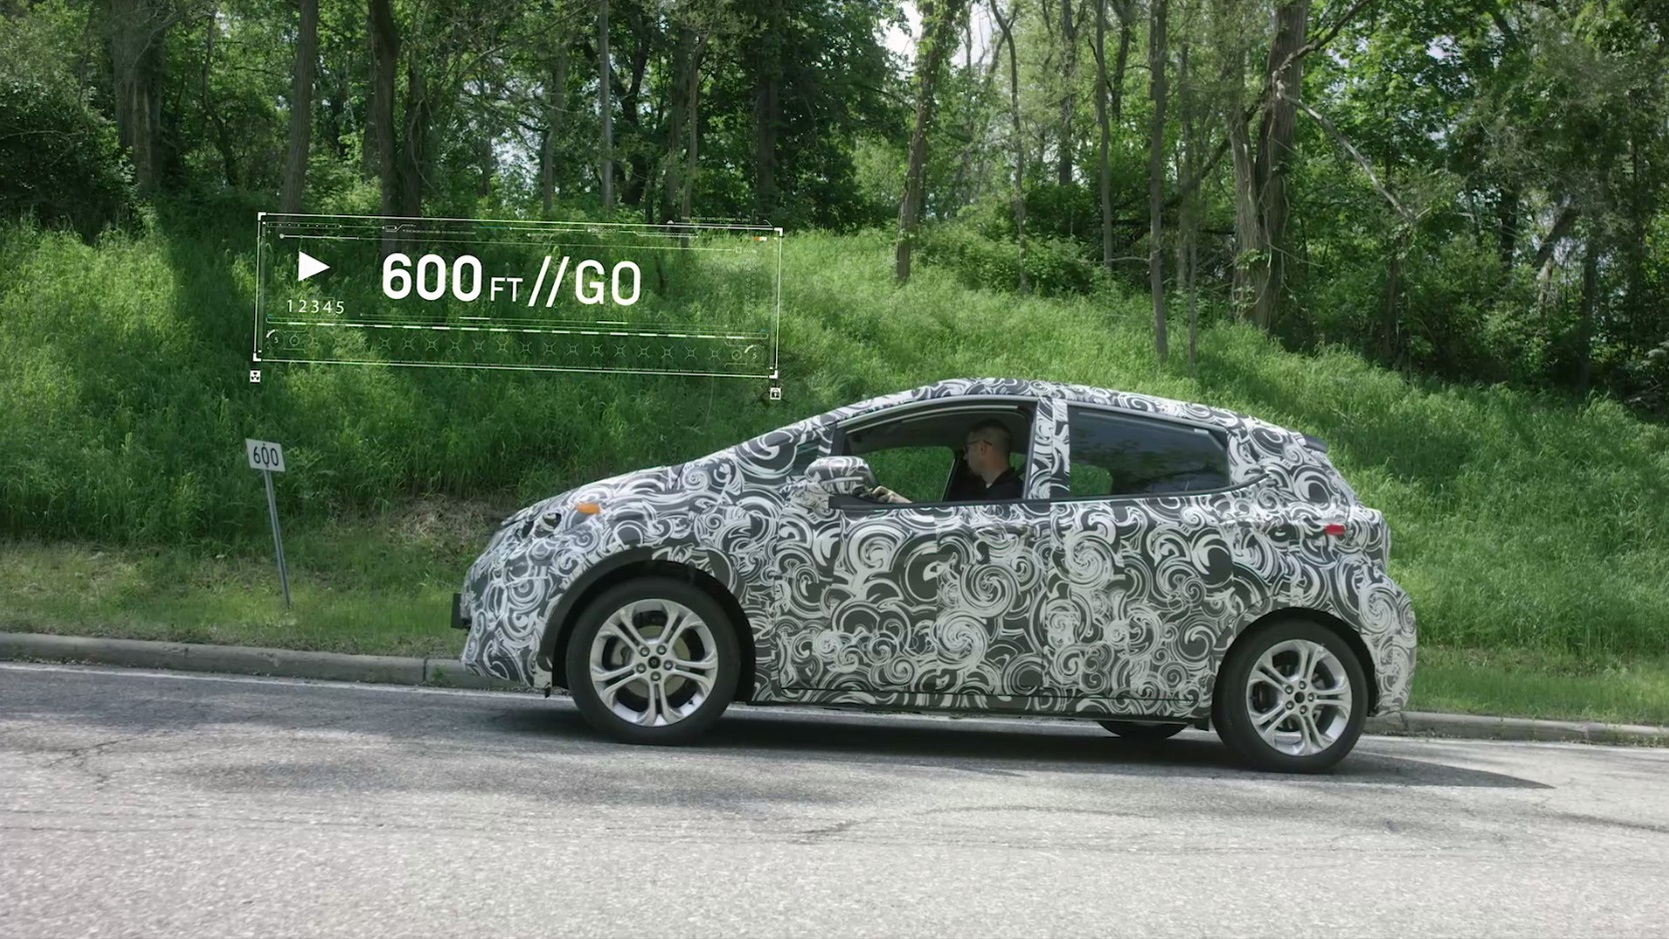 Chevrolet Bolt EV electric car development prototypes in testing, Jan-Jun 2015  [from GM video]